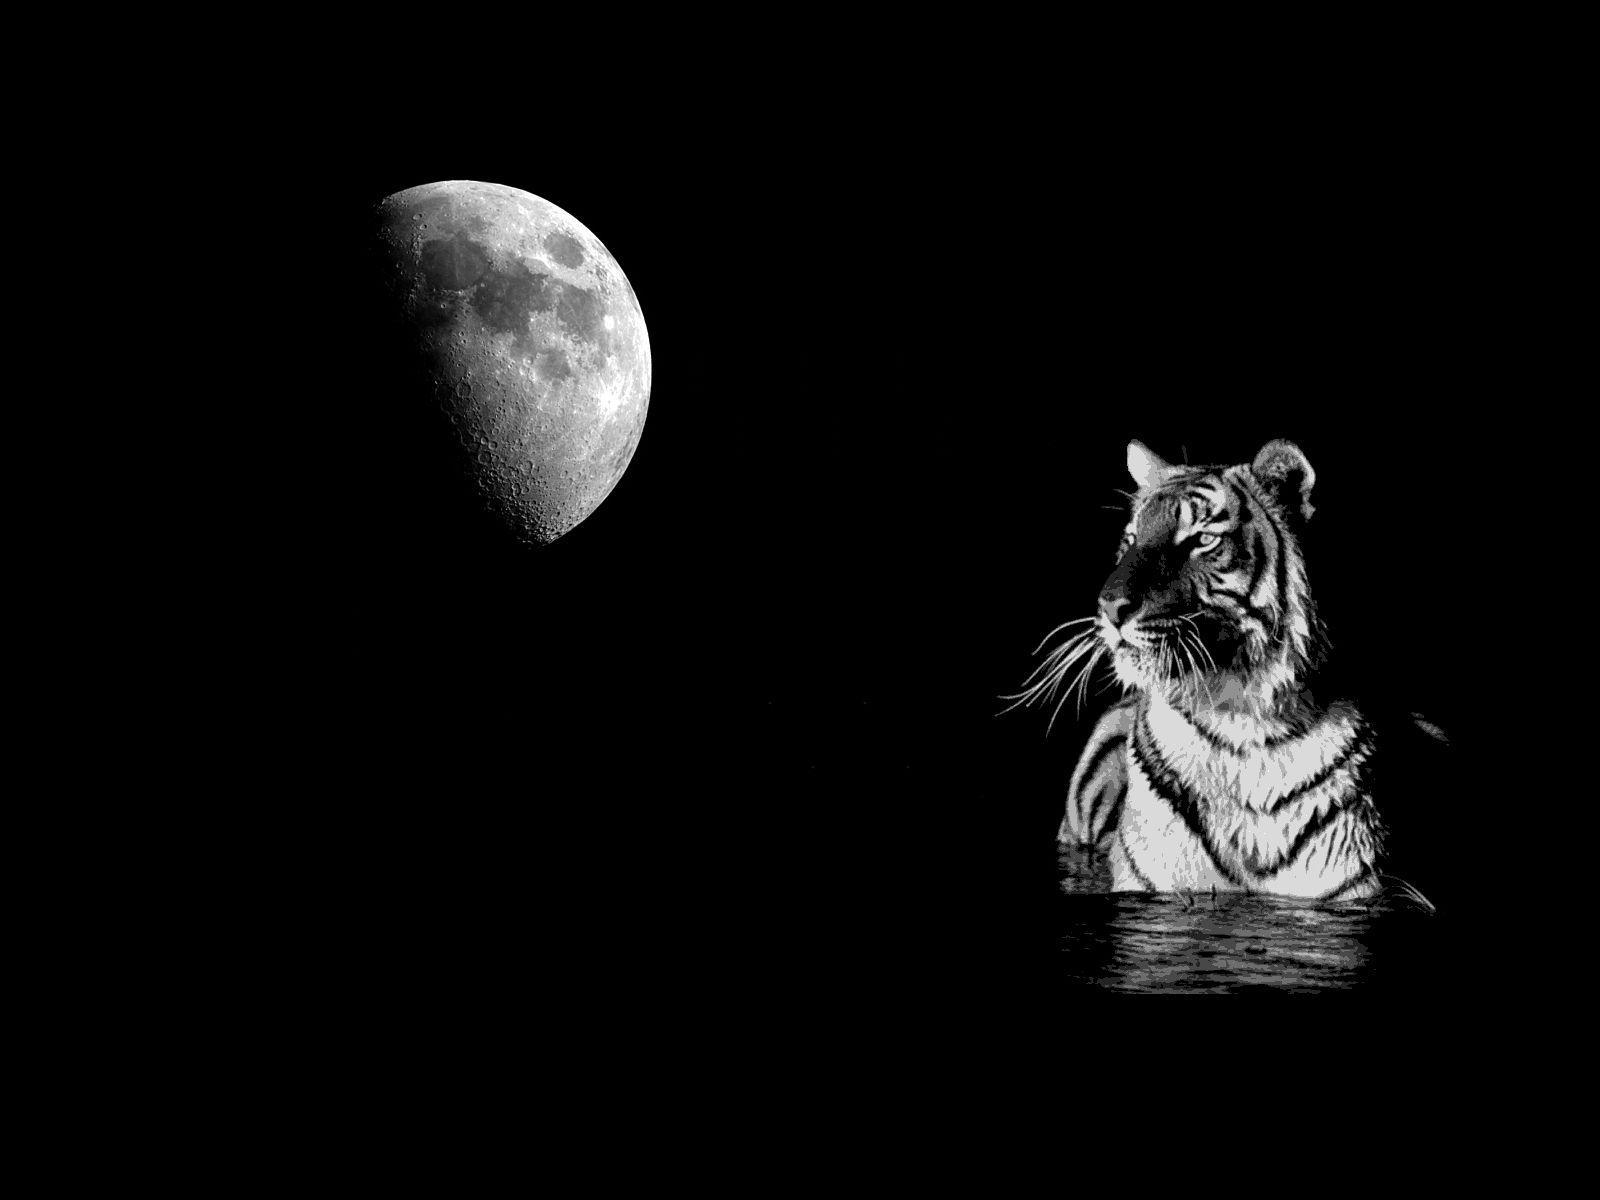 Black Tiger Wallpapers, Fantastic HDQ Black Tiger Image